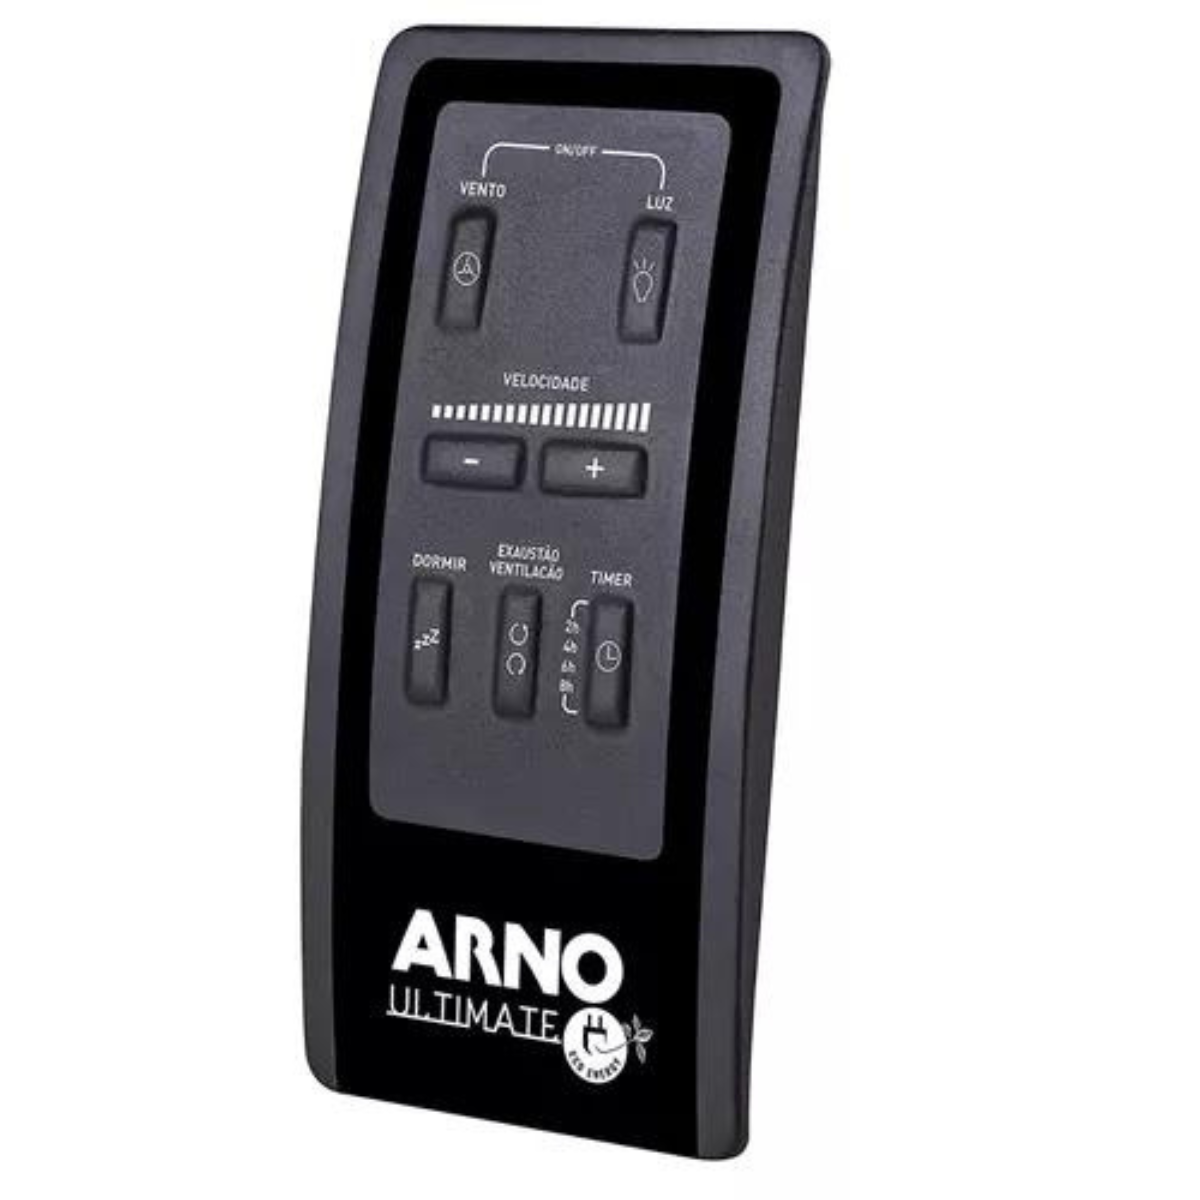 Controle Remoto Ventilador de Teto Arno Ultimate Arno Vx10 - 3